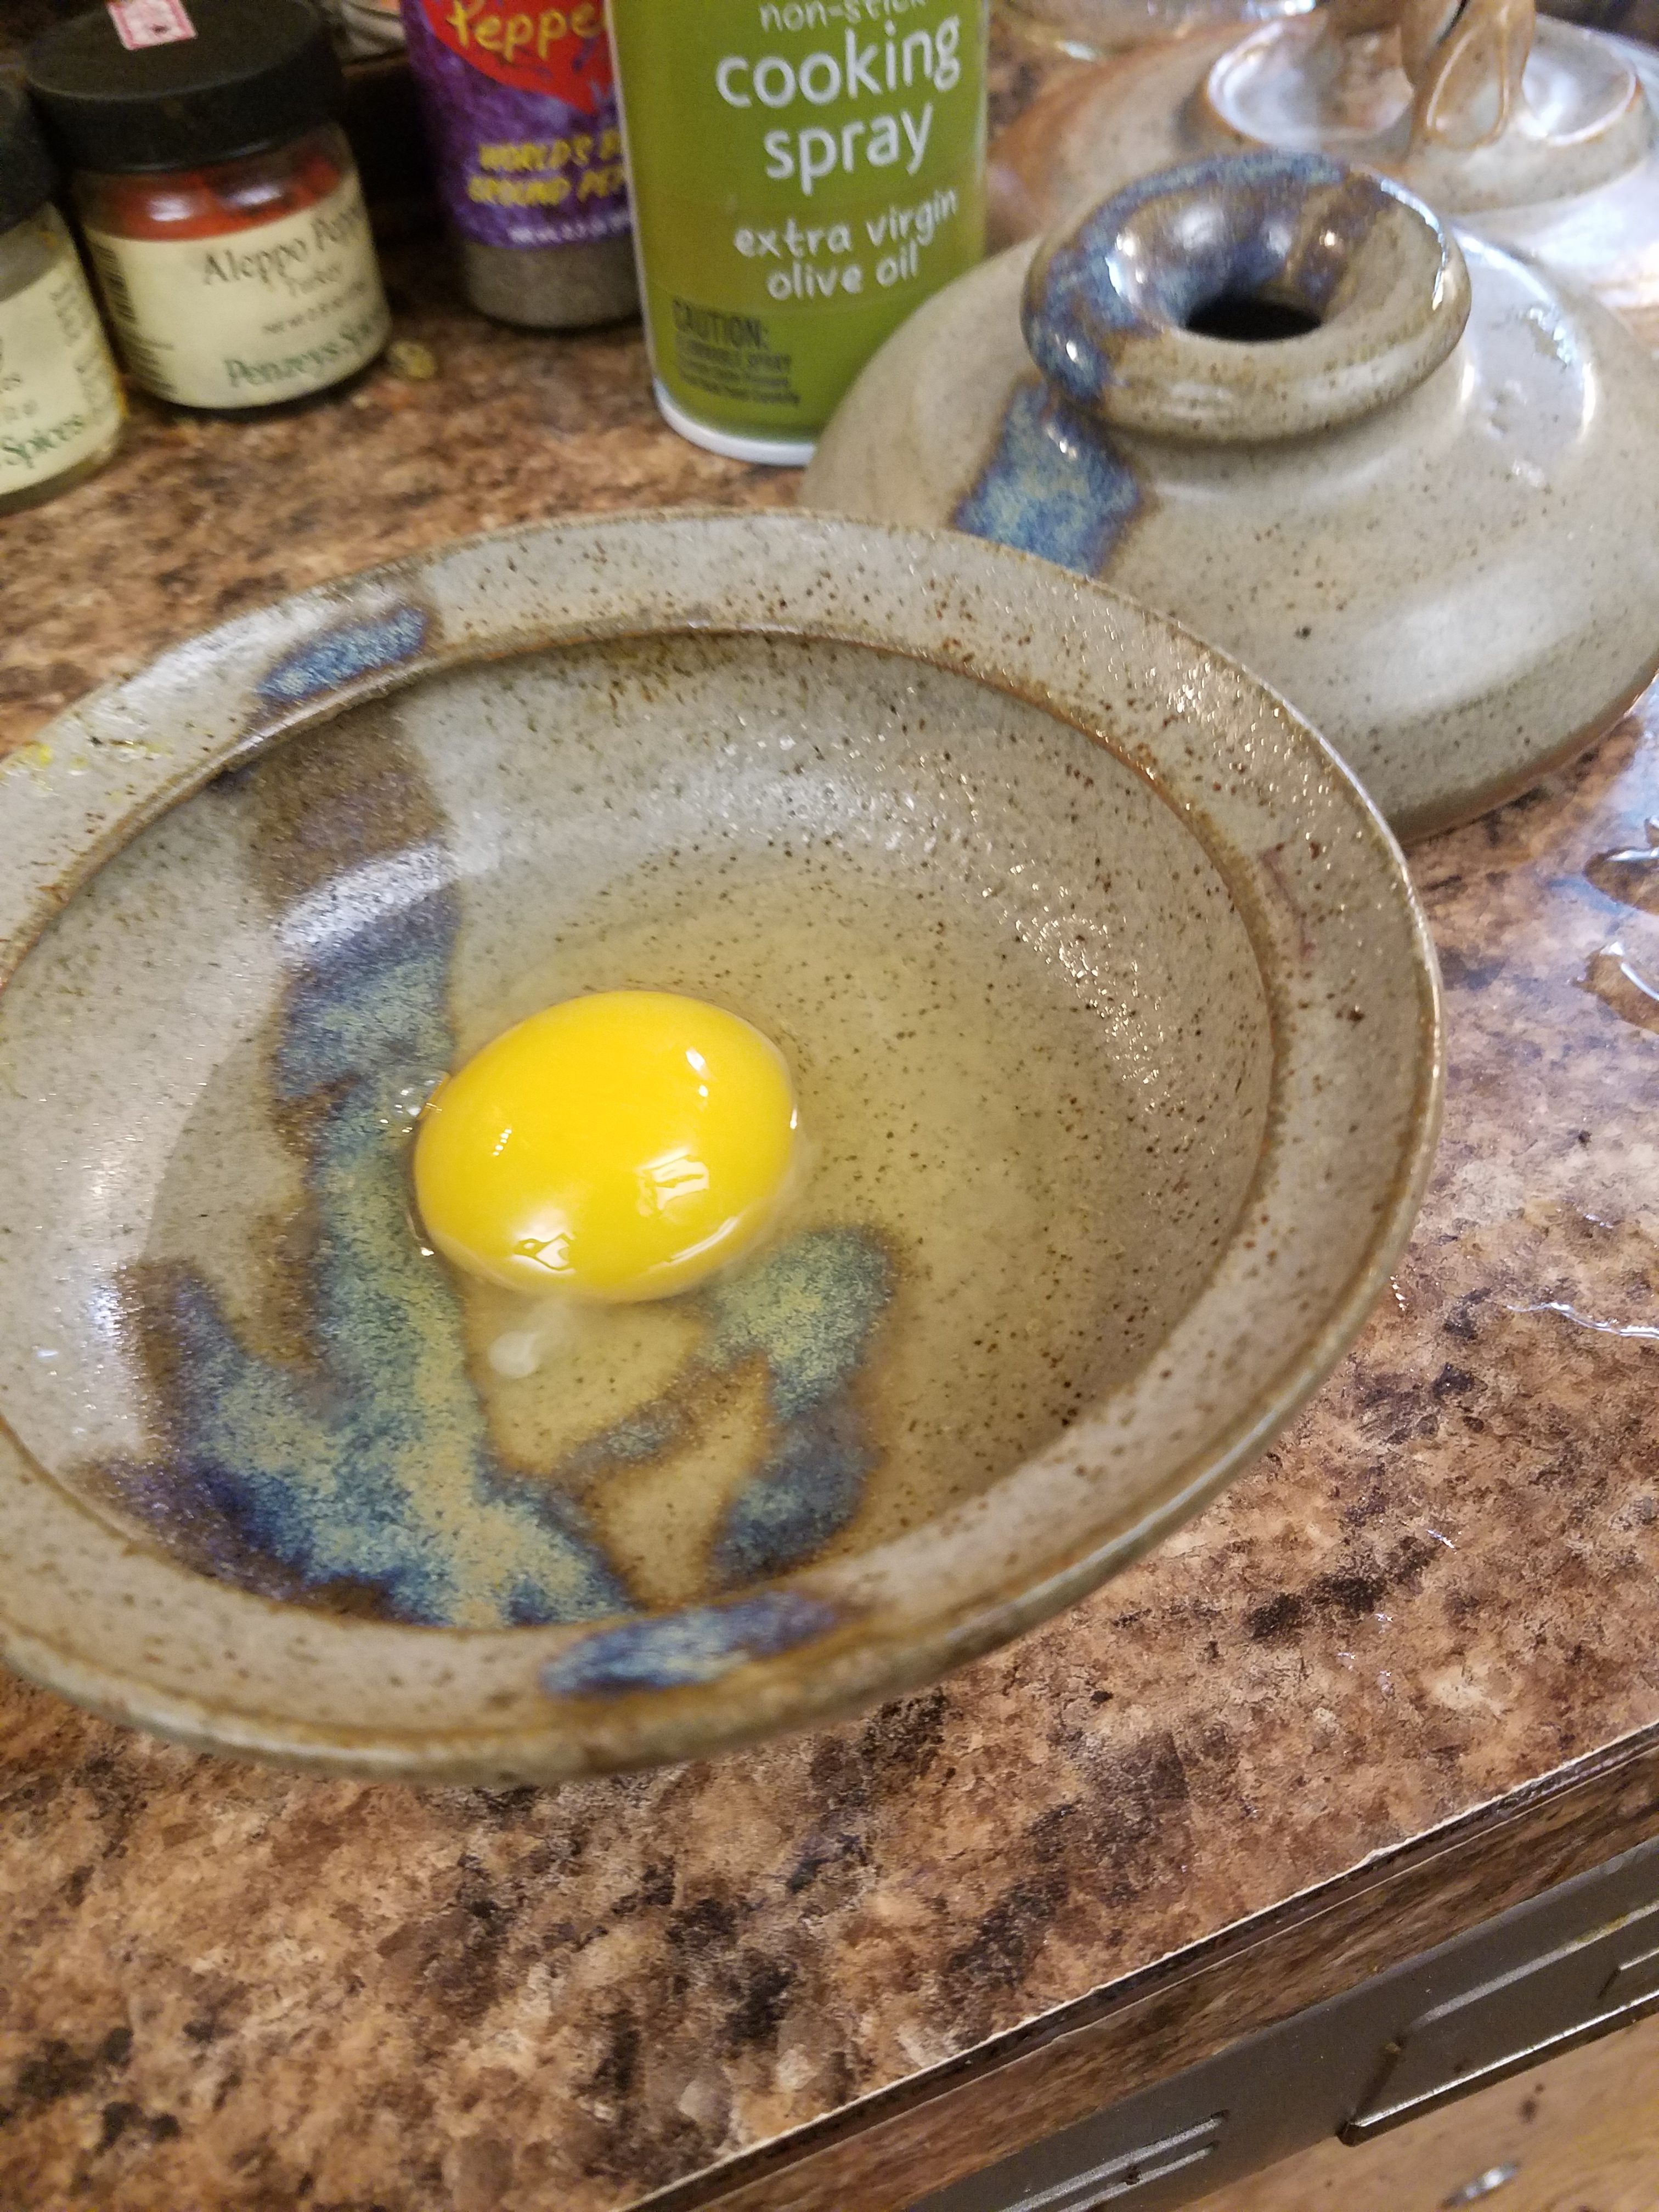 https://newclaypottery.com/wp-content/uploads/2019/05/Cooking-Micro-Egg-e1568251732640.jpg